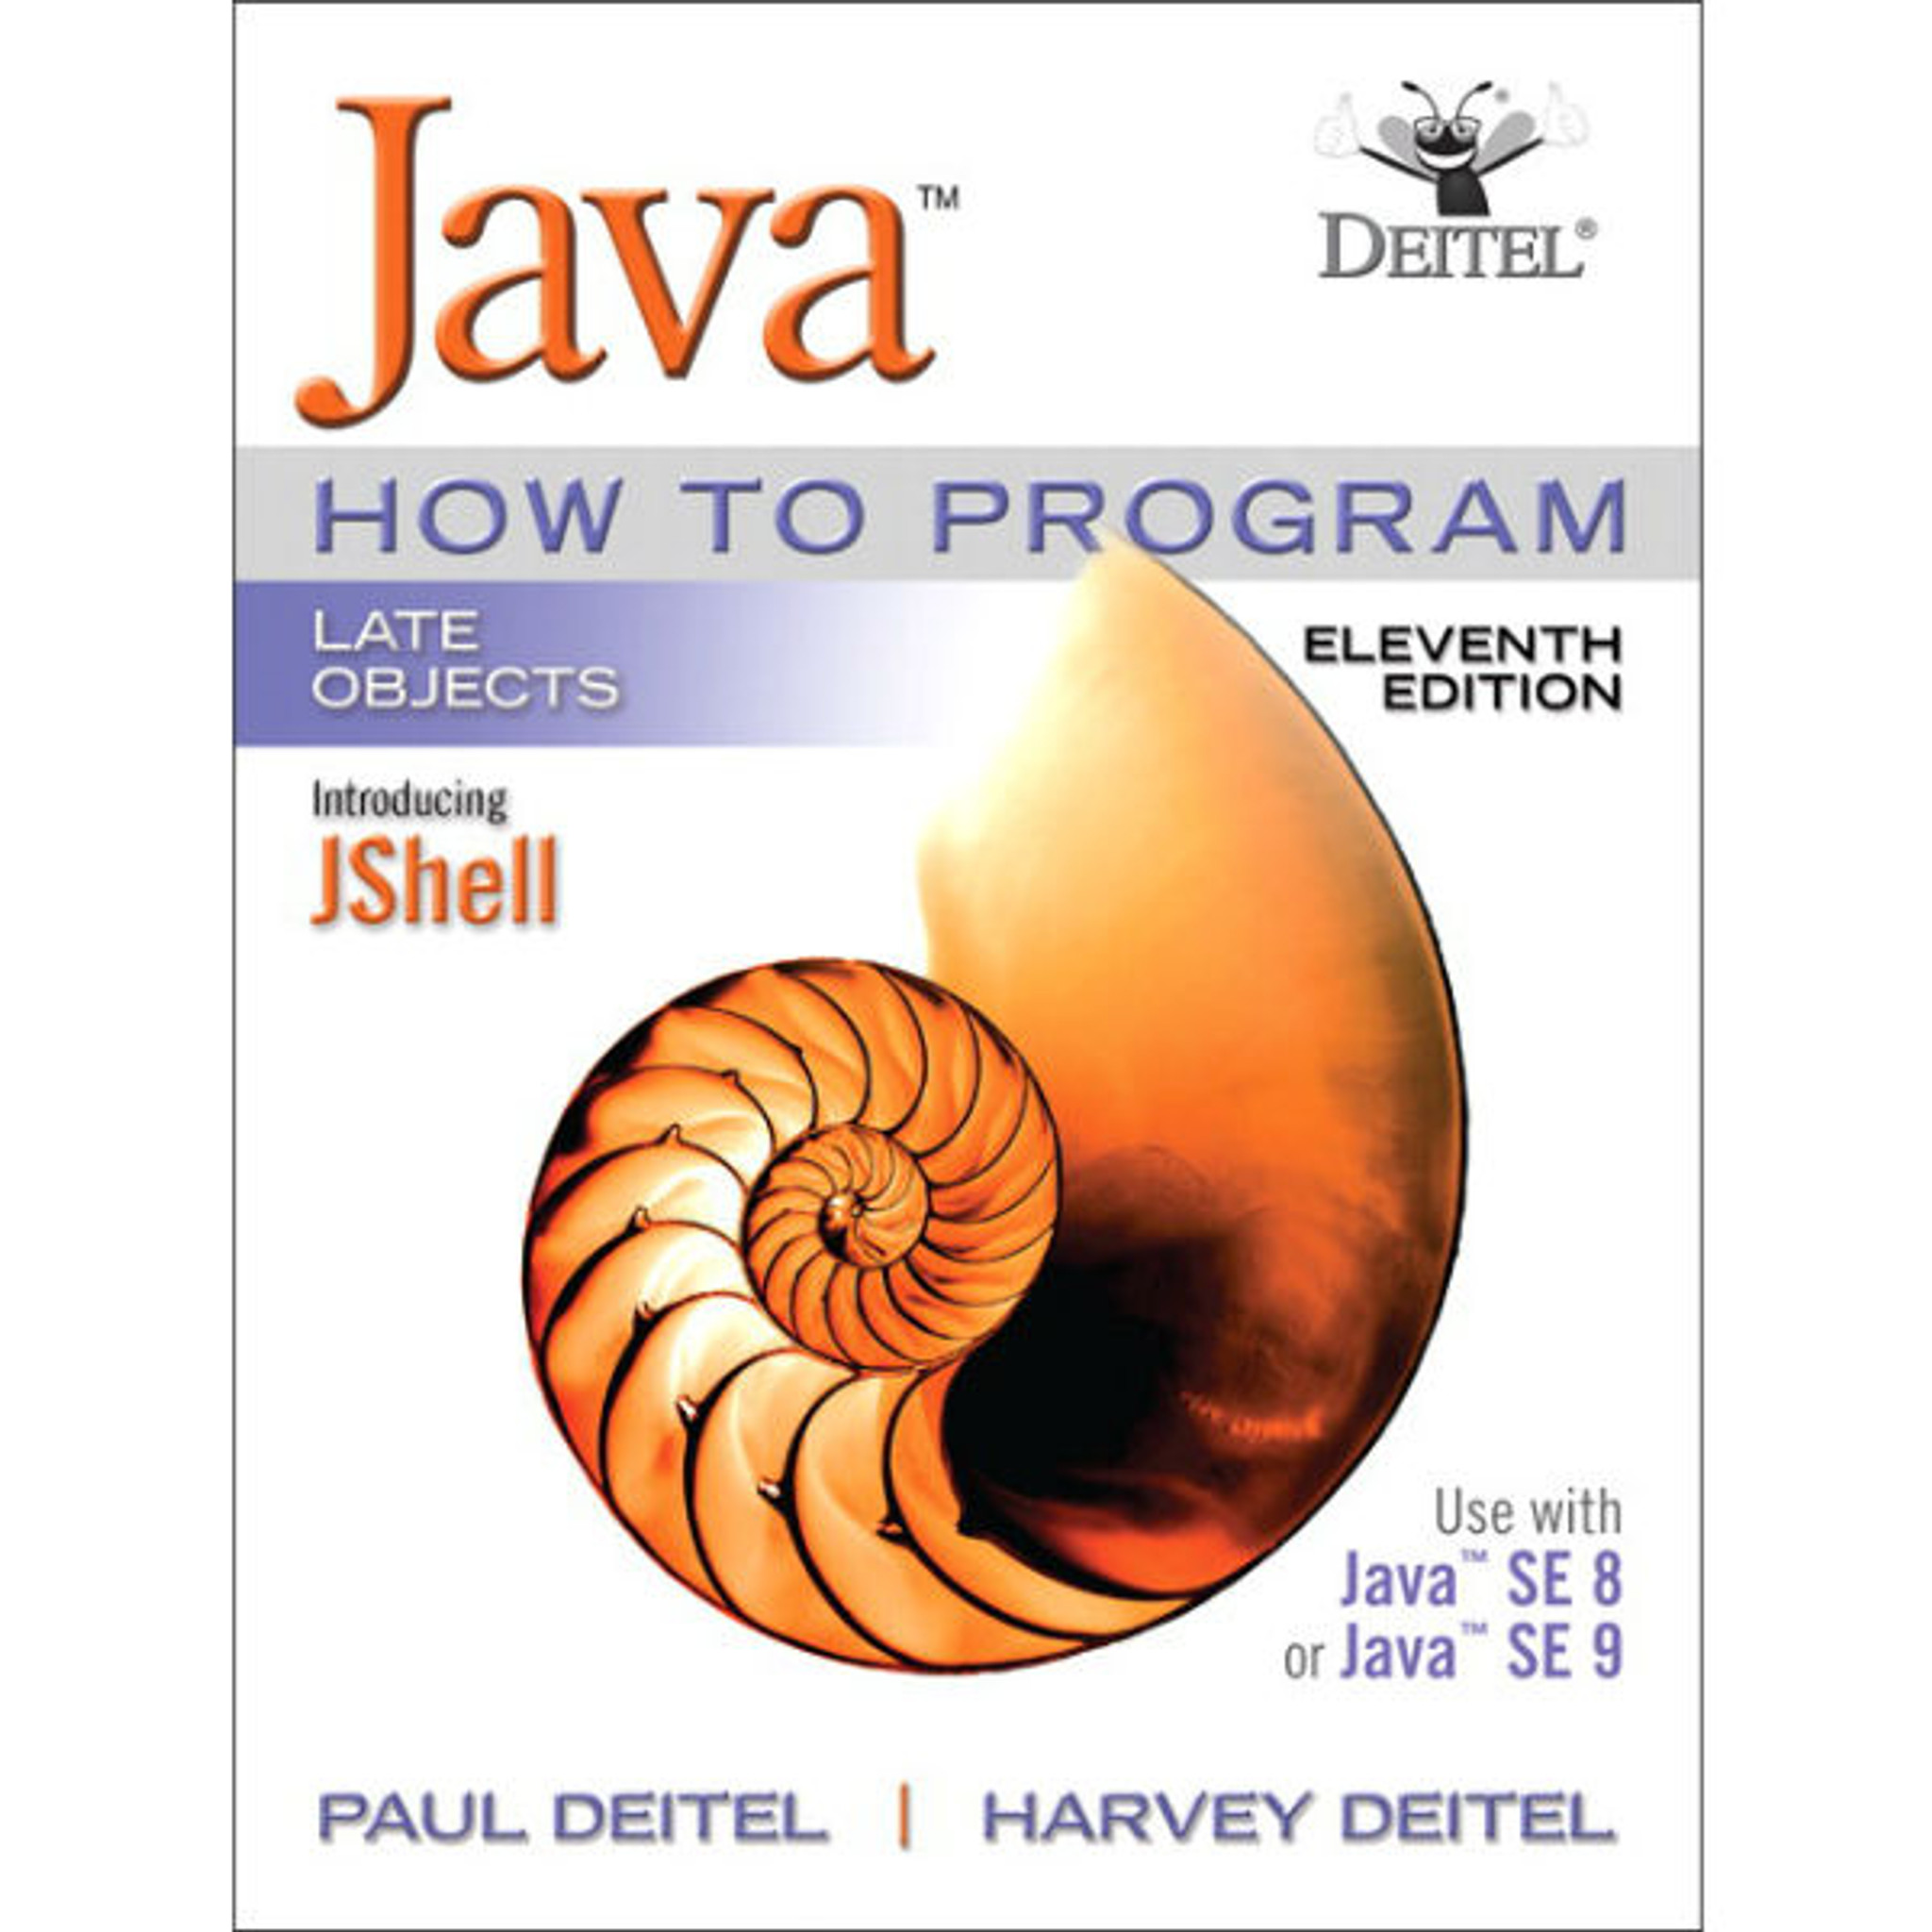 deitel java how to program 11th edition pdf free download